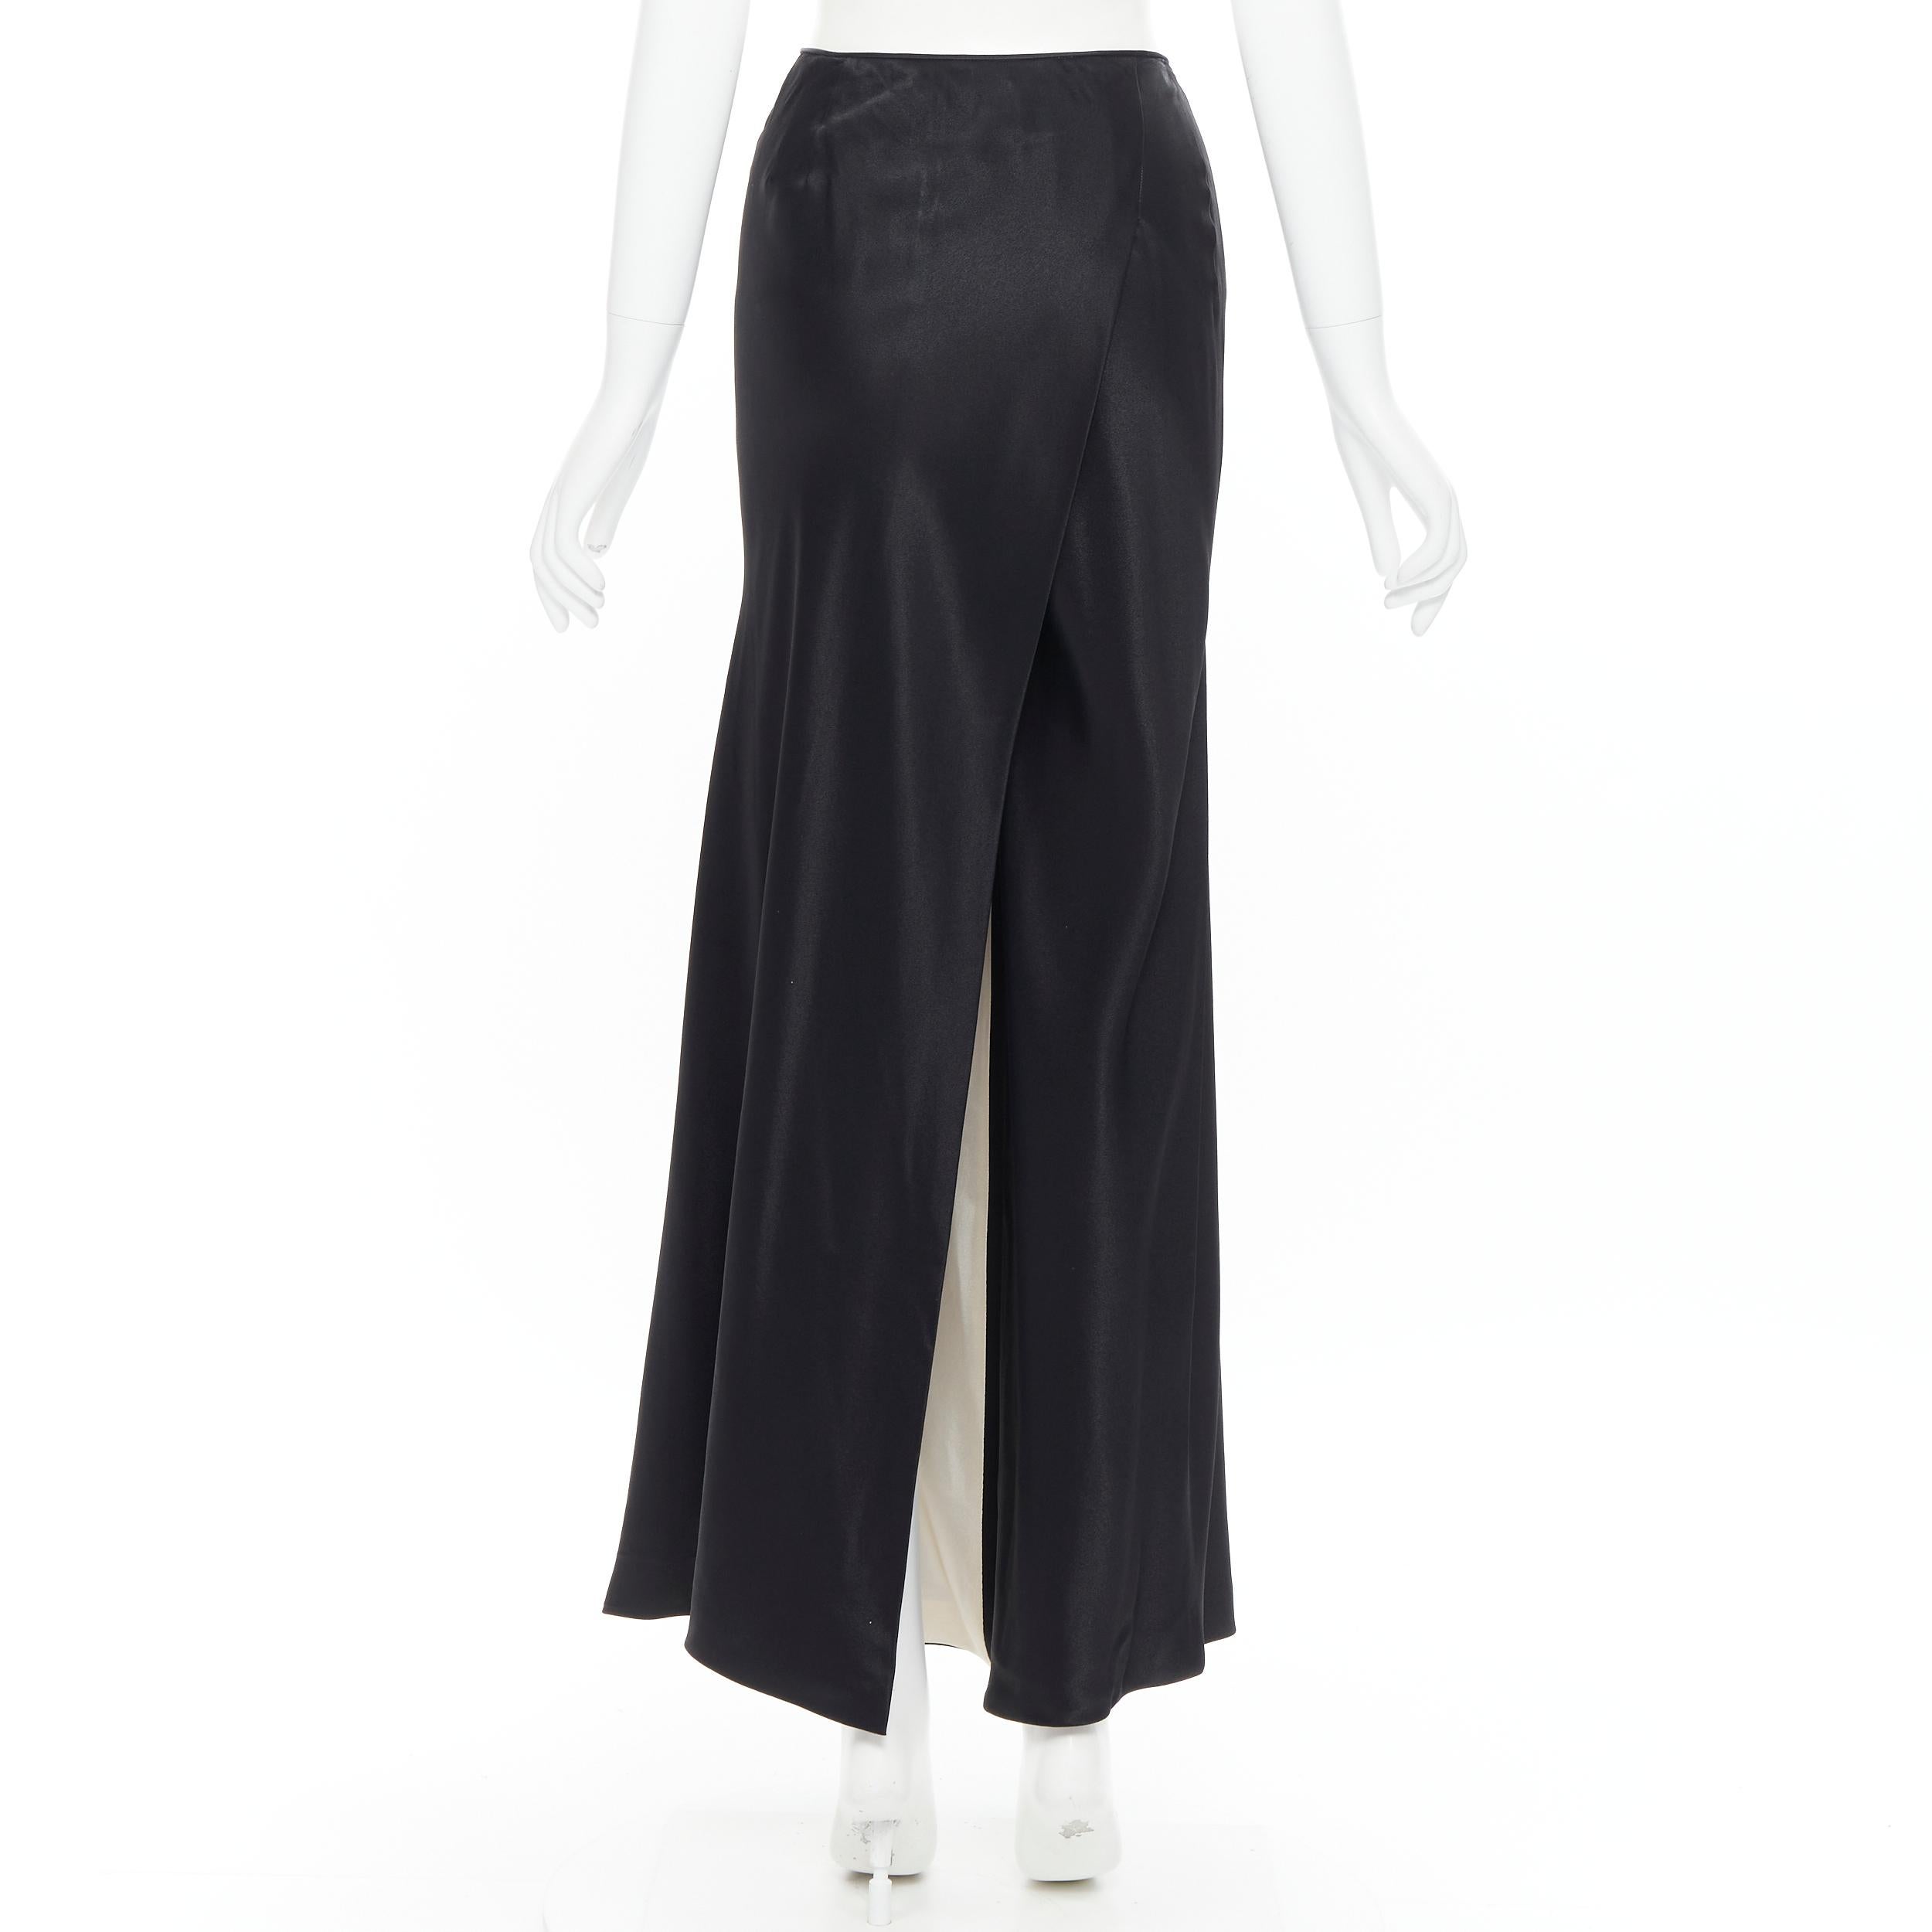 Black JOHN GALLIANO black silk satin button asymmetric wrap slit skirt pants XS